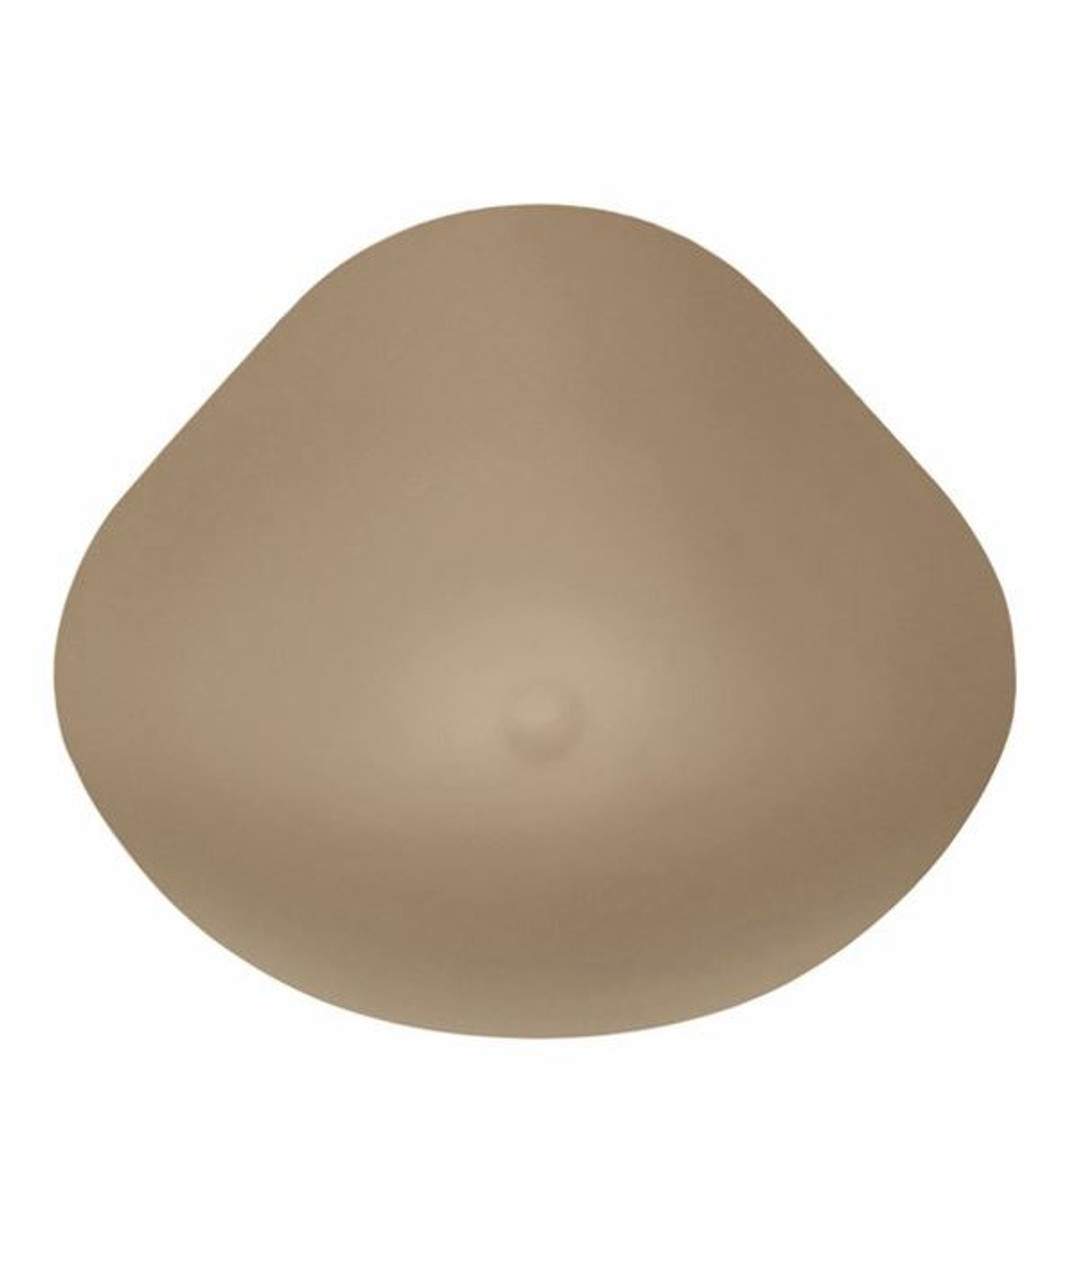 Natura Xtra Light breast form - a lightweight breast form